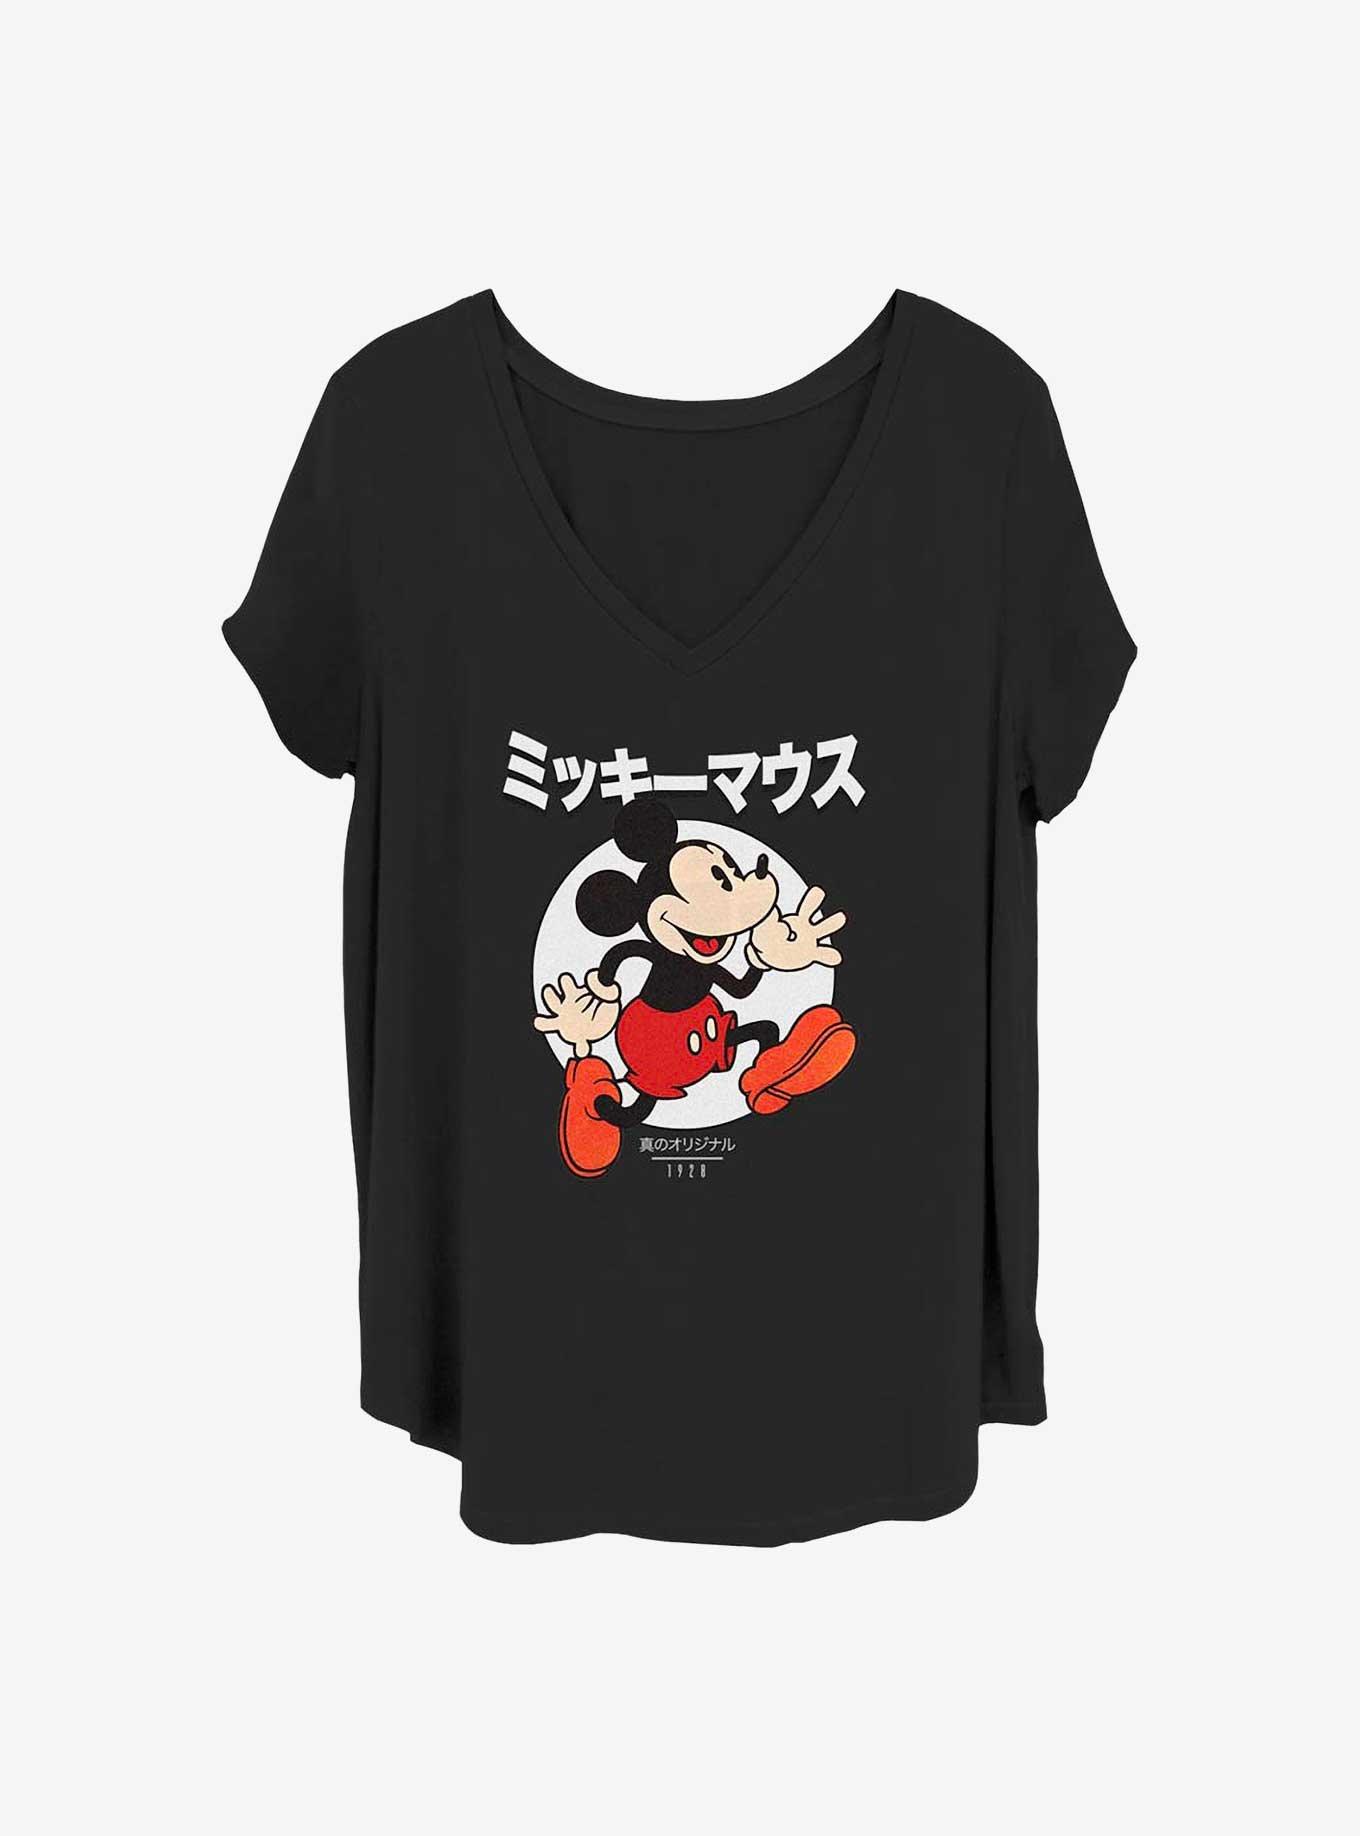 Disney Mickey Mouse Kanji Comic Girls T-Shirt Plus